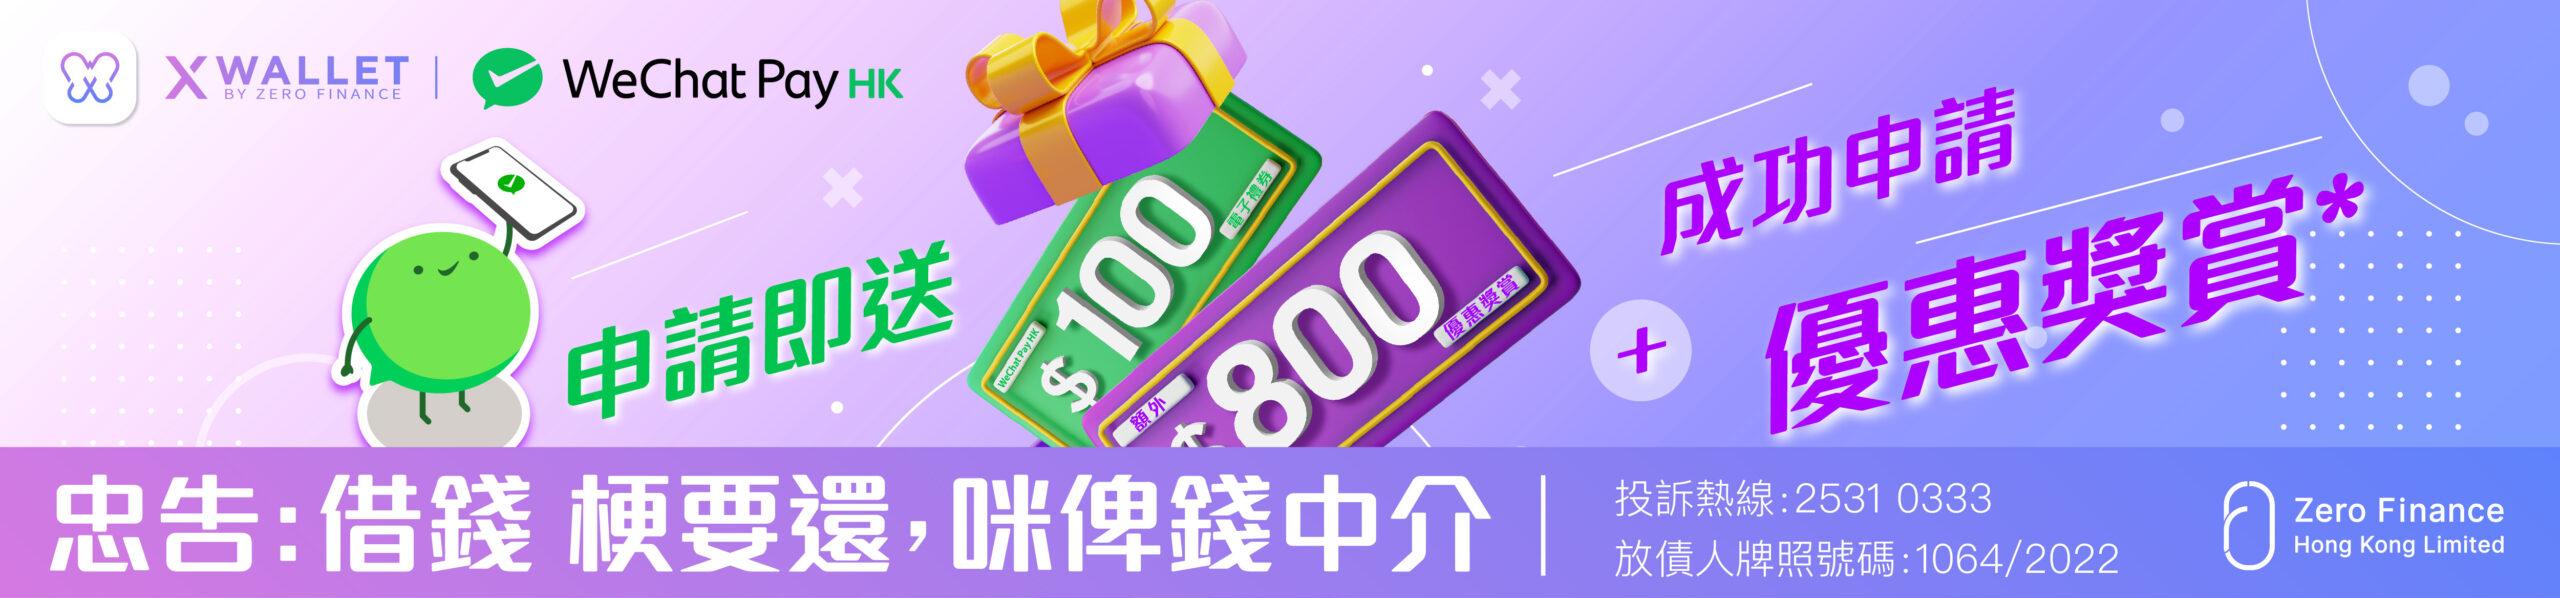 【X Wallet迎新獎賞】申請開戶即賞$100 WeChat Pay HK電子現金券 + $800現金獎